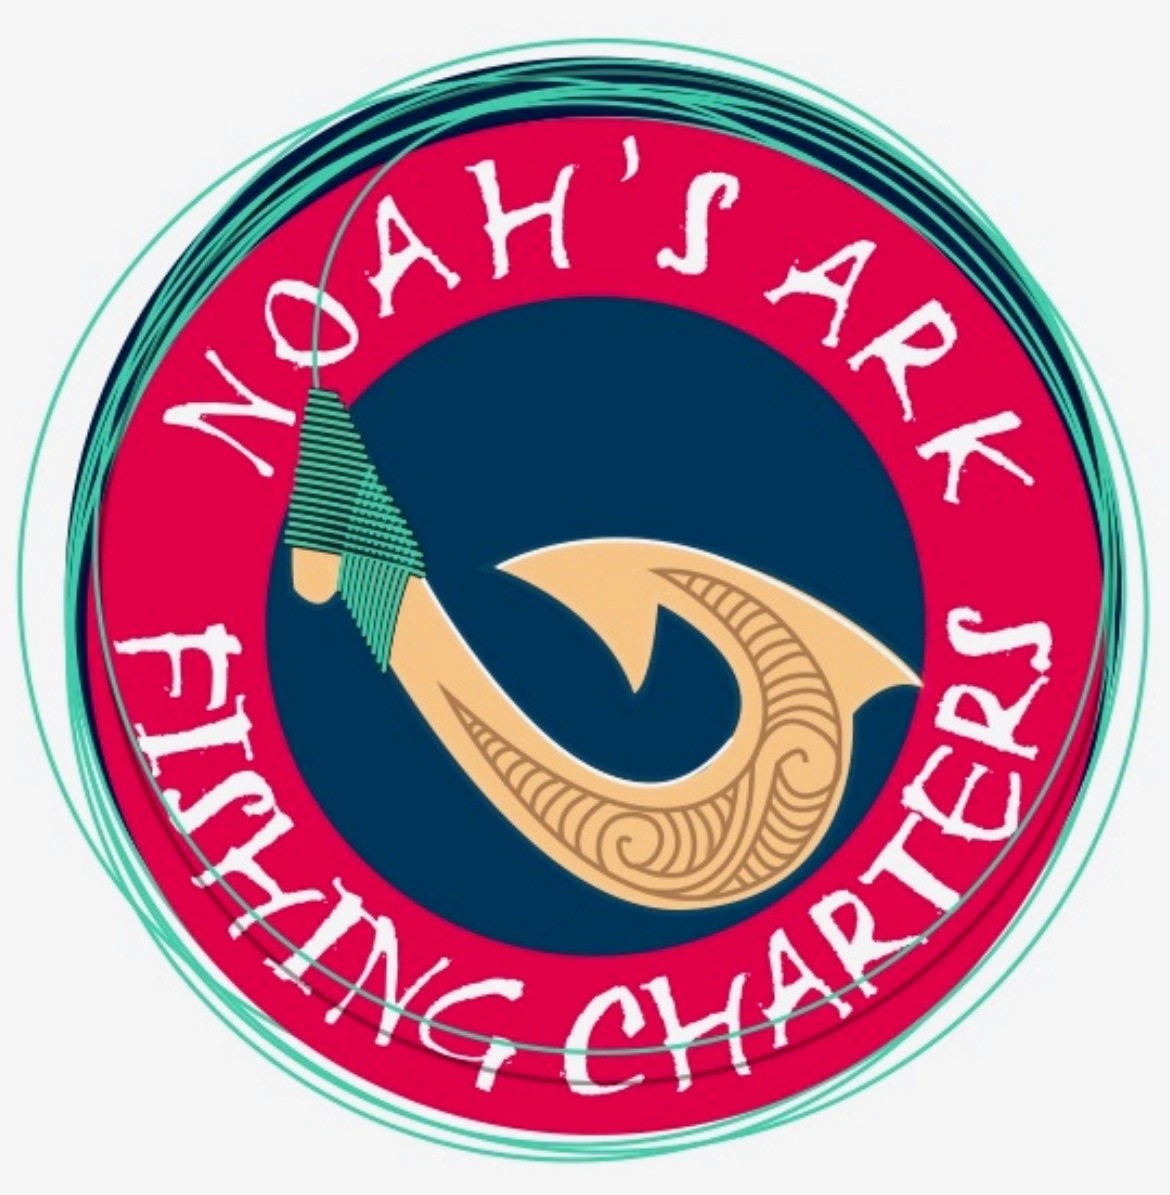 Noah's Ark Charters logo